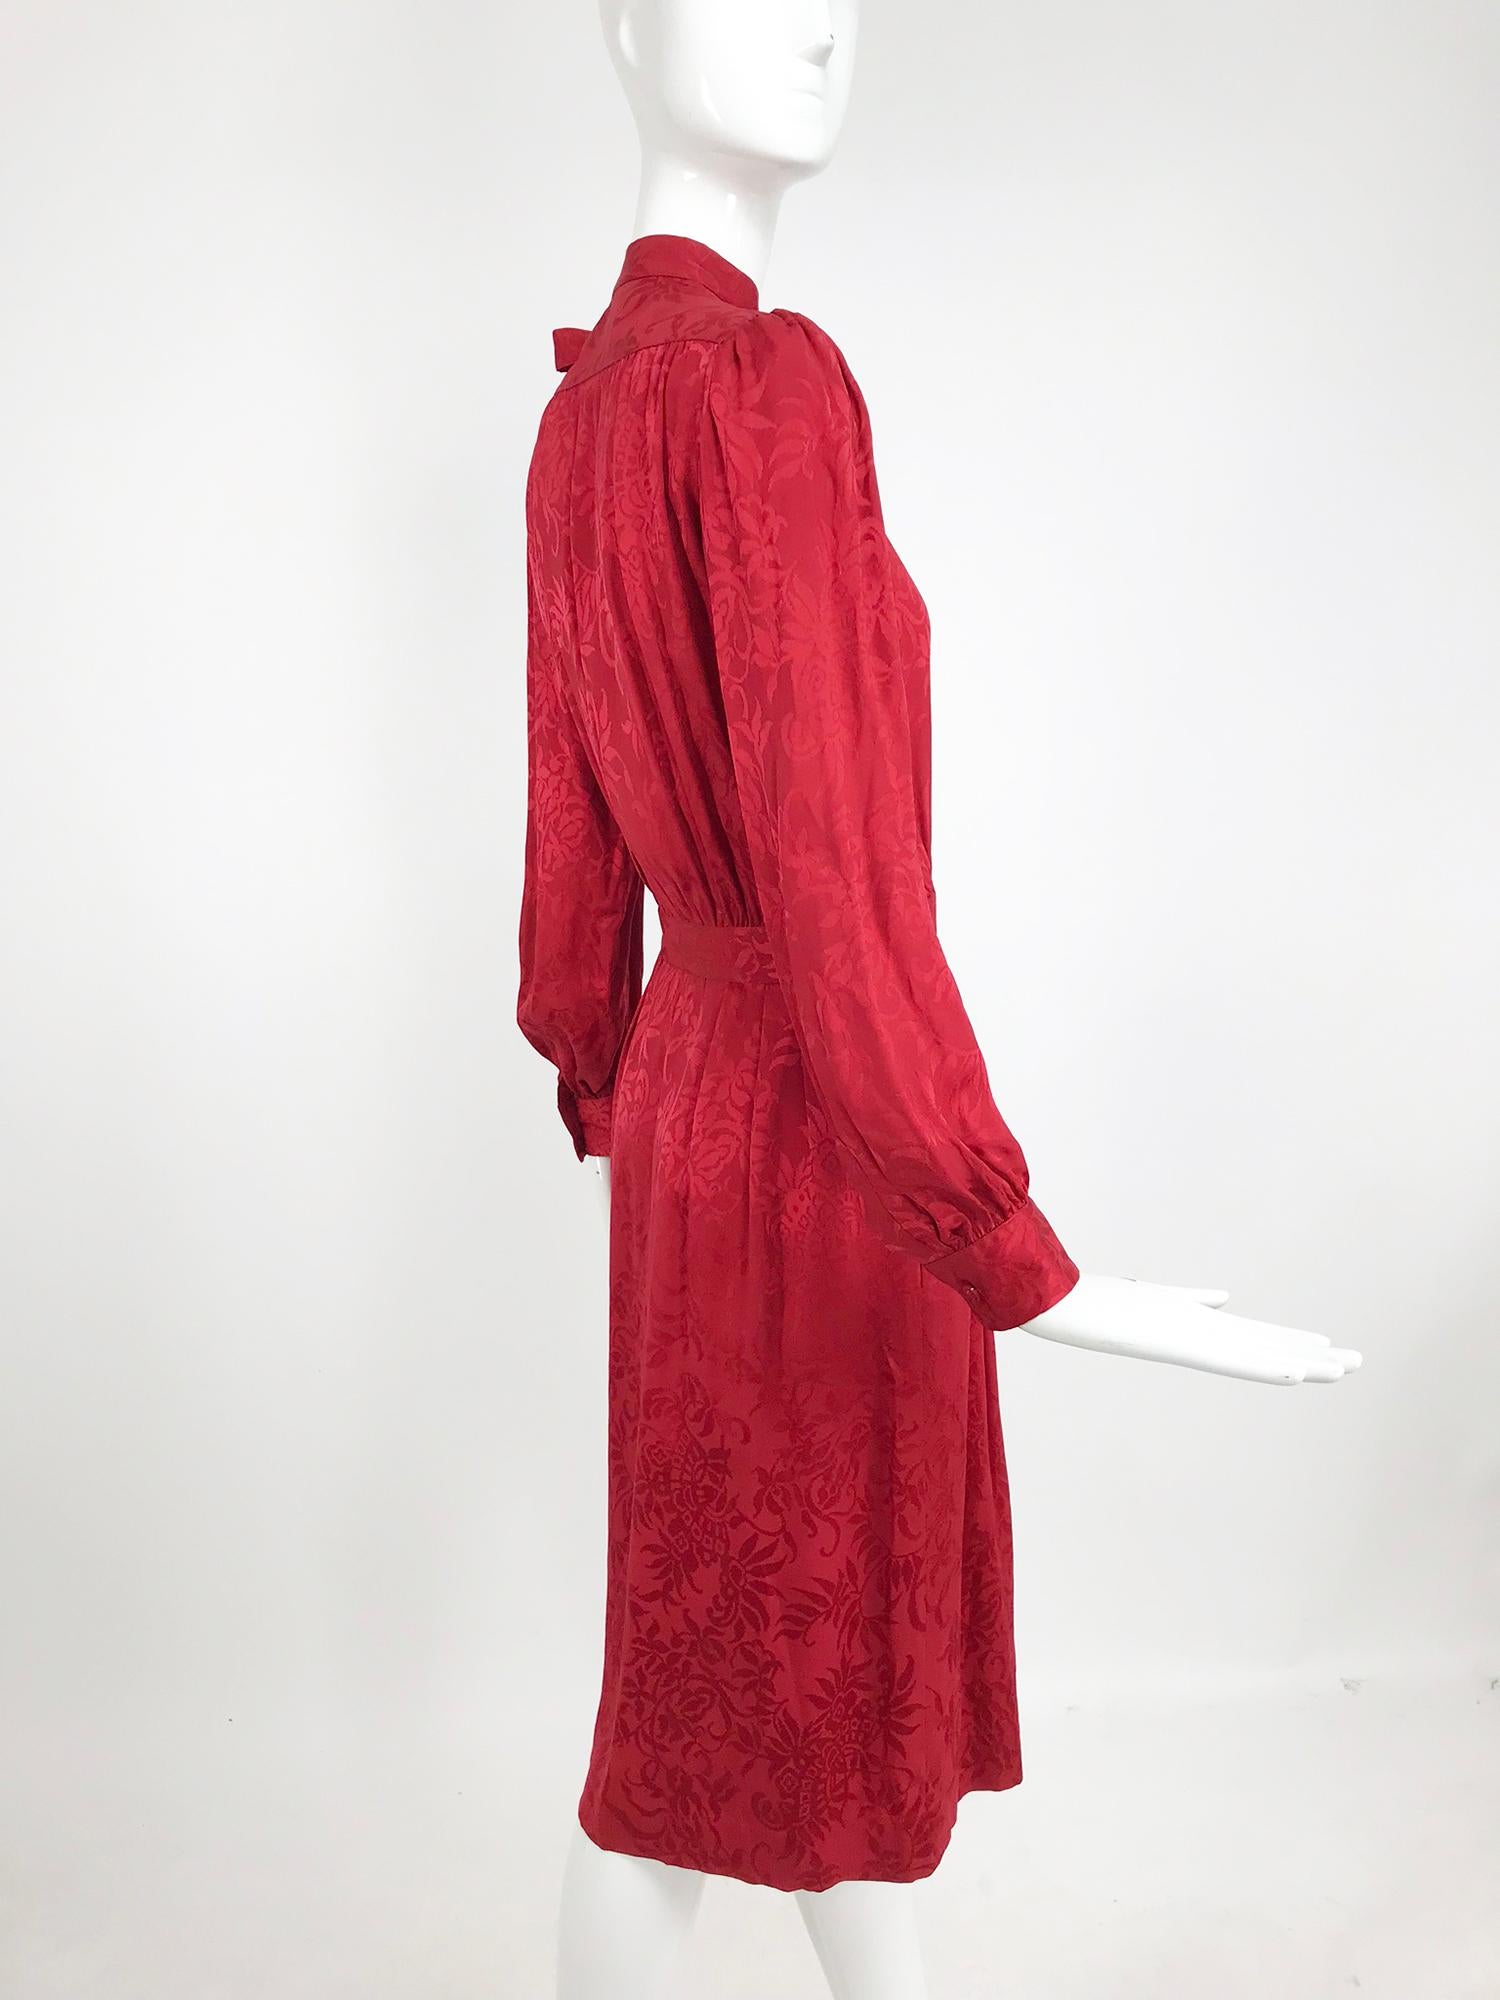 Yves Saint Laurent Red Silk Jacquard Bow Tie Dress 1970s 2